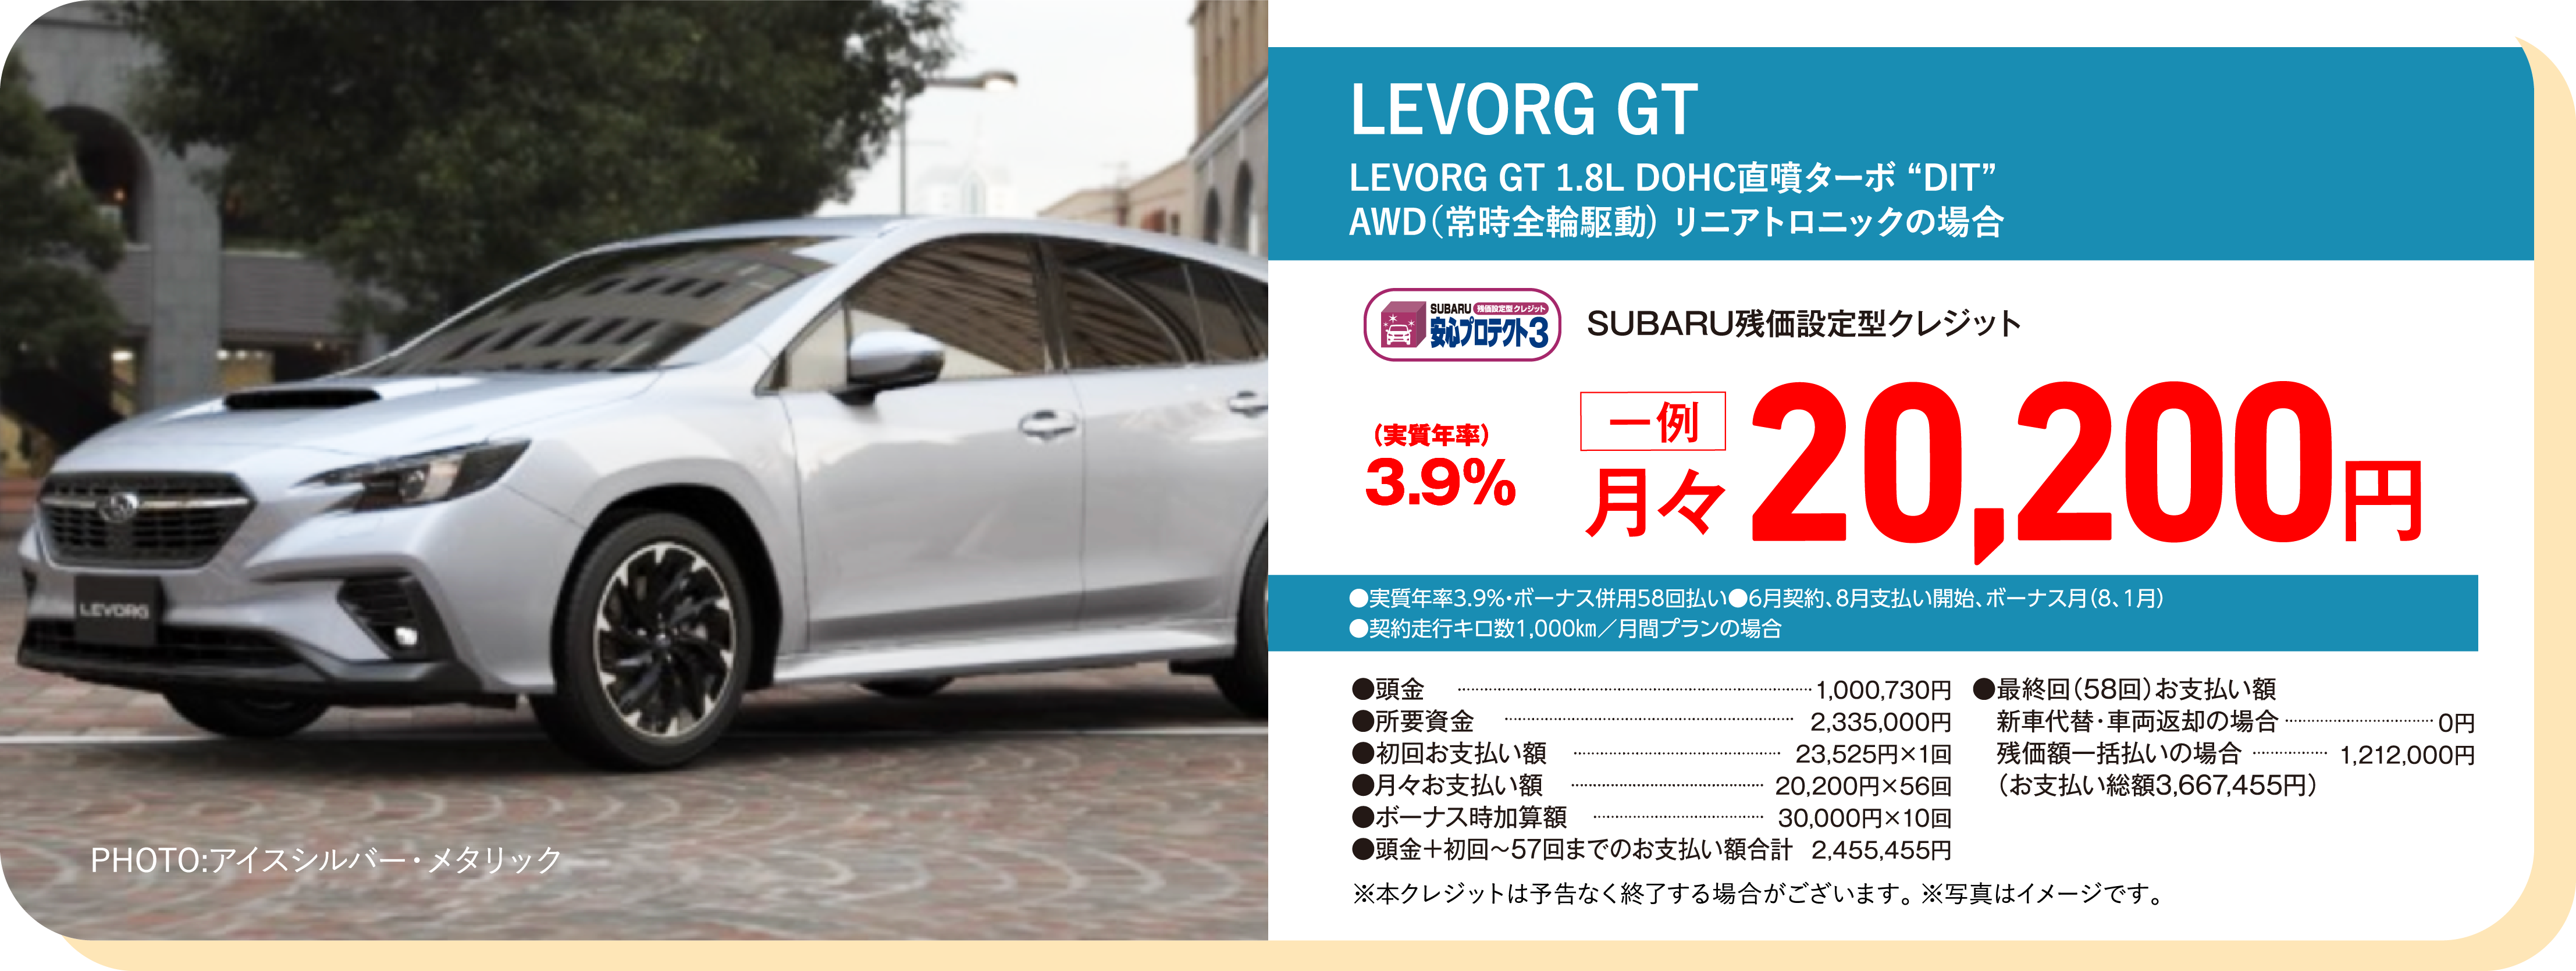 LEVORG GT 1.8L DOHC直噴ターボ “DIT”AWD（常時全輪駆動) リニアトロニックの場合